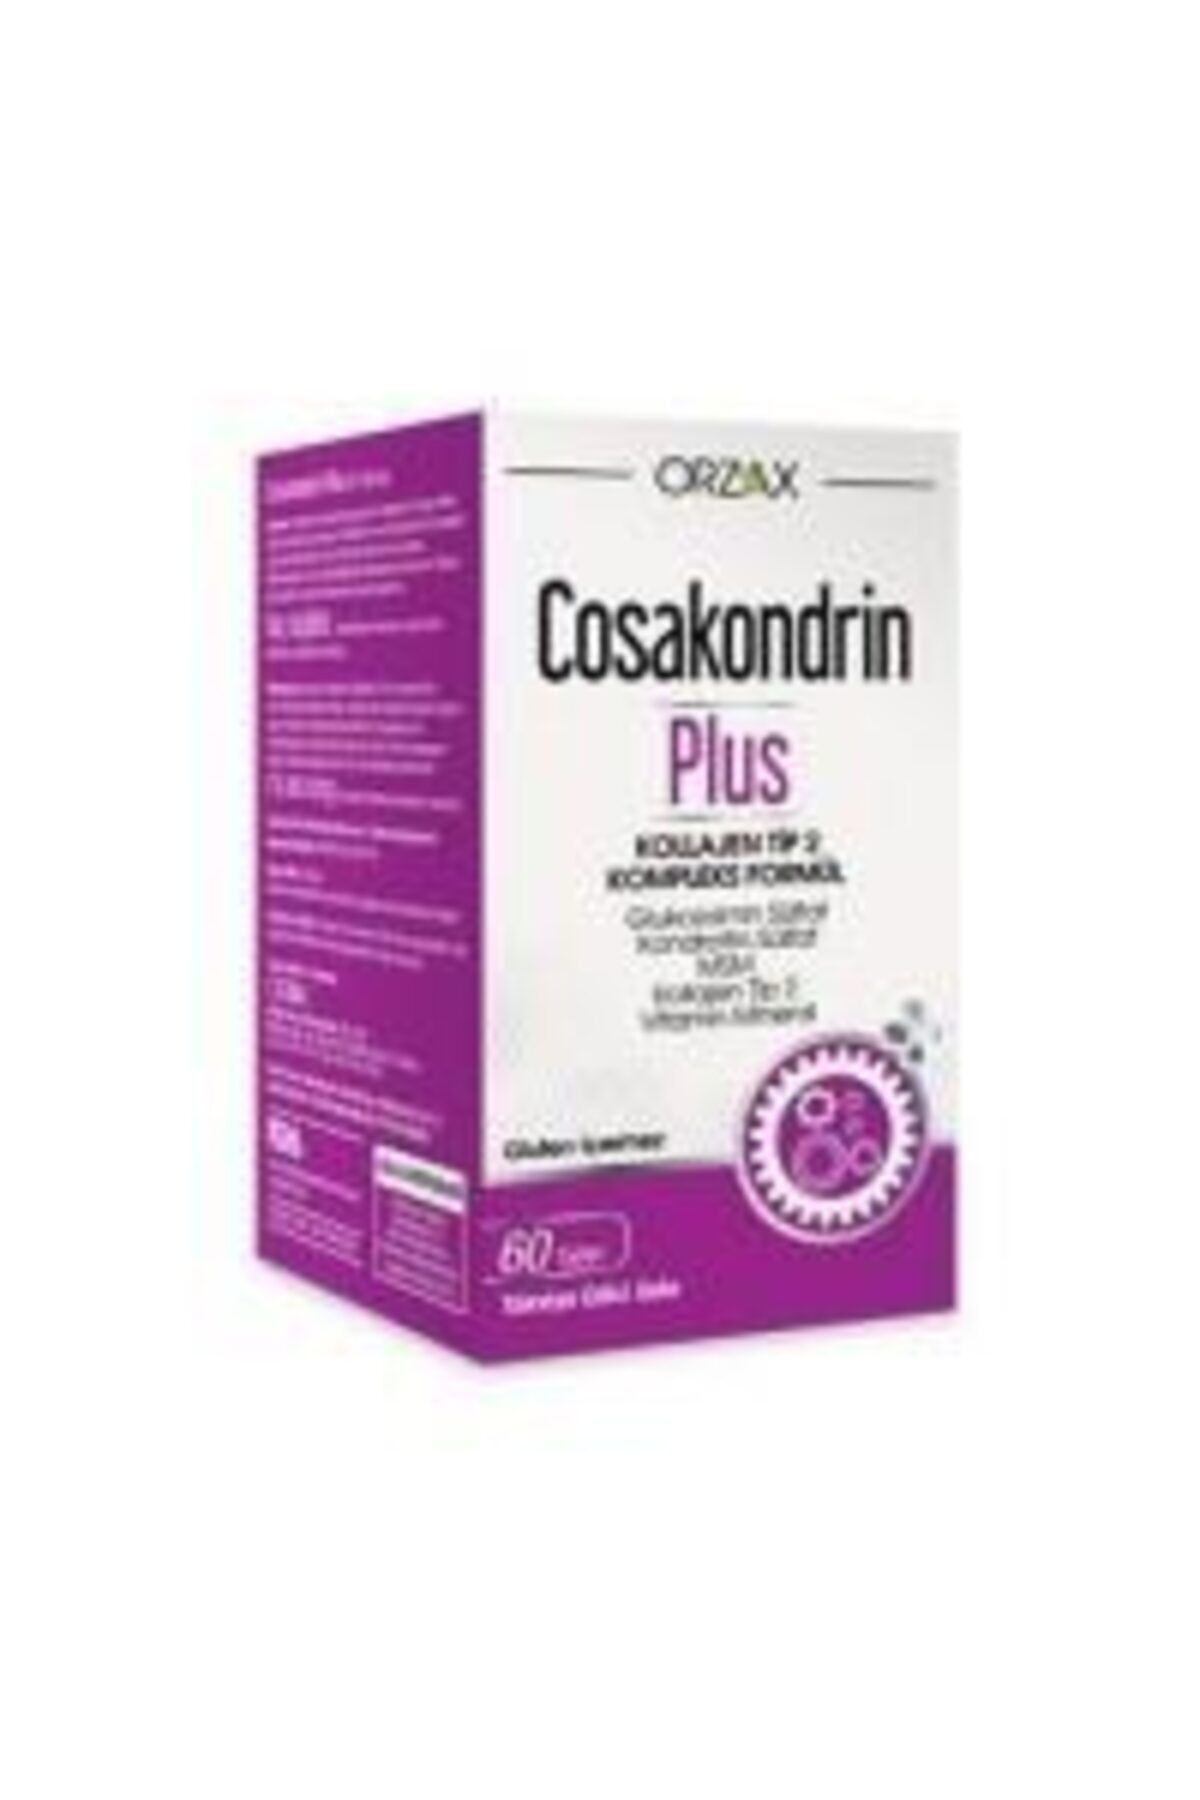 Ocean Cosakondrin Plus Complex Formula 60 Tablet